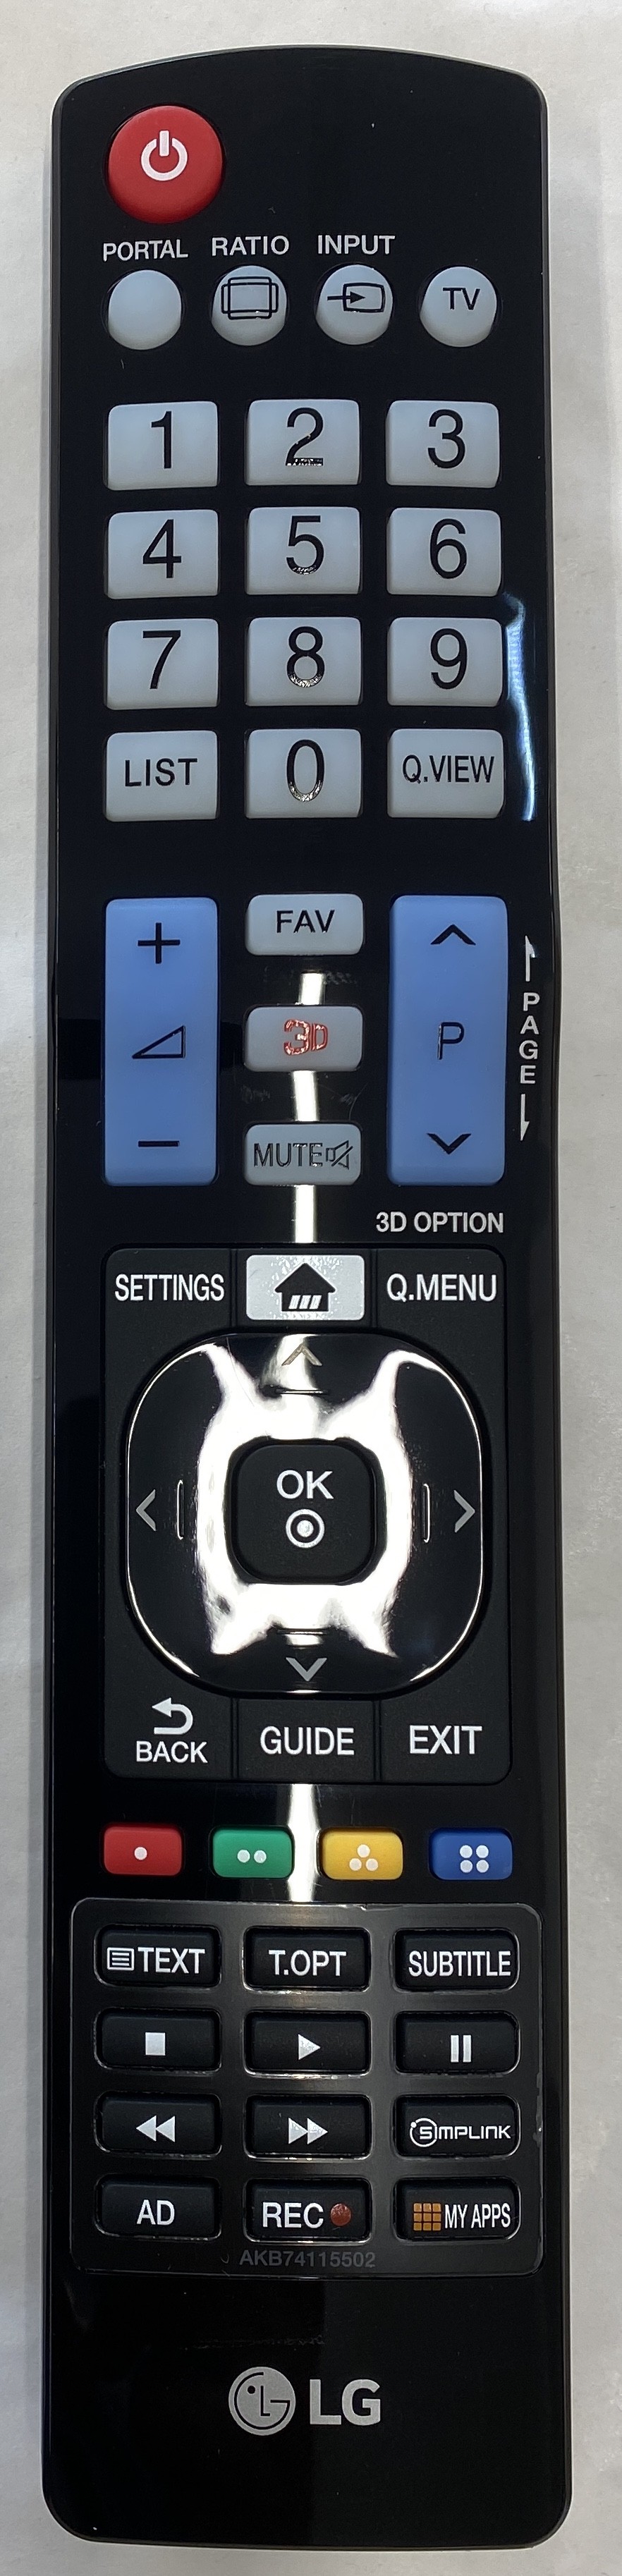 LG 22LK330 Remote Control Original